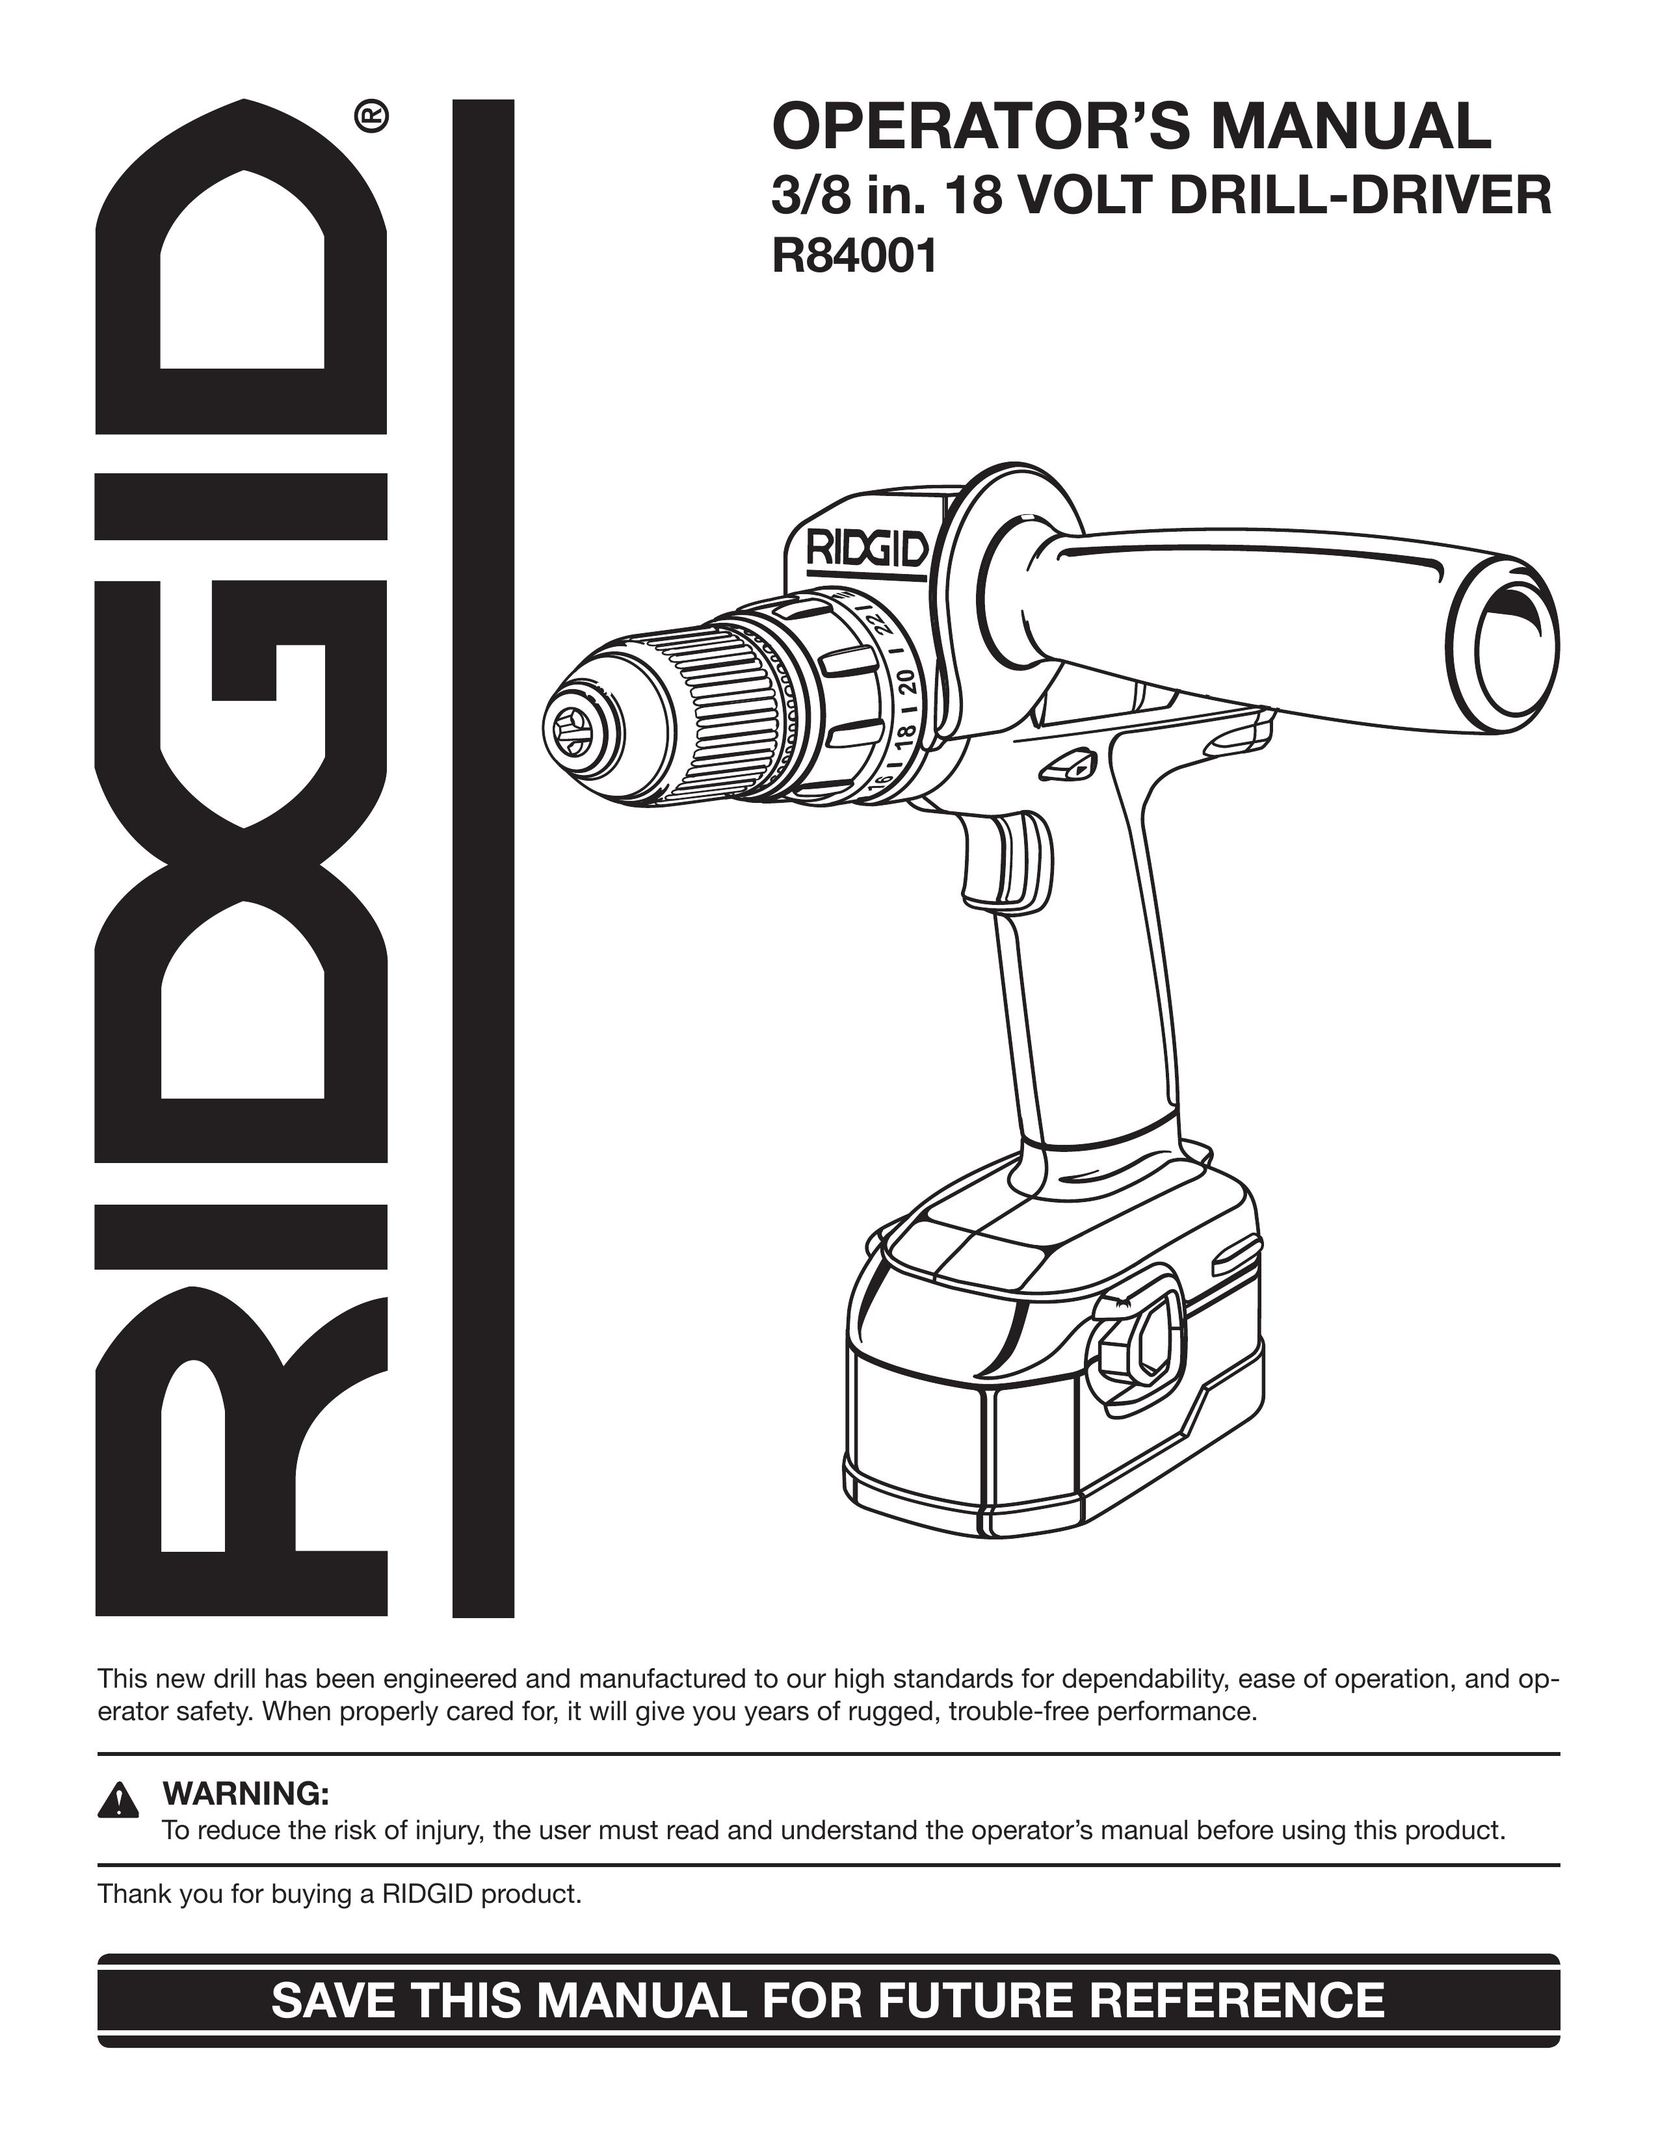 RIDGID R84001 Drill User Manual